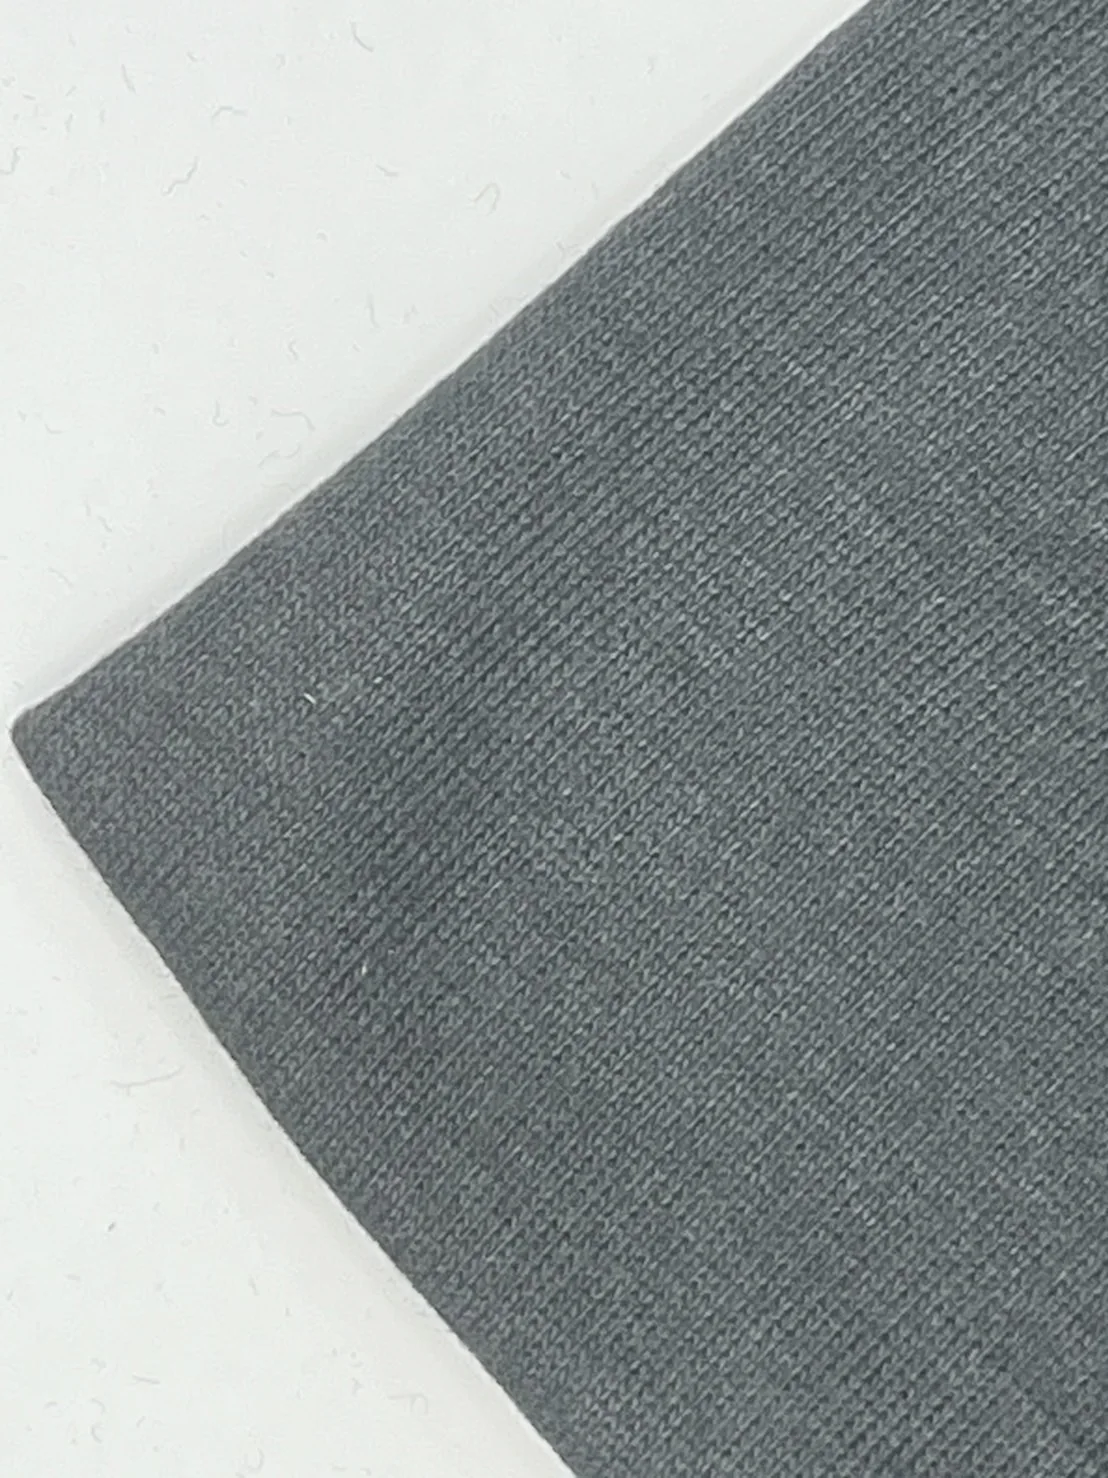 Flame Retardant Fabric For workwear